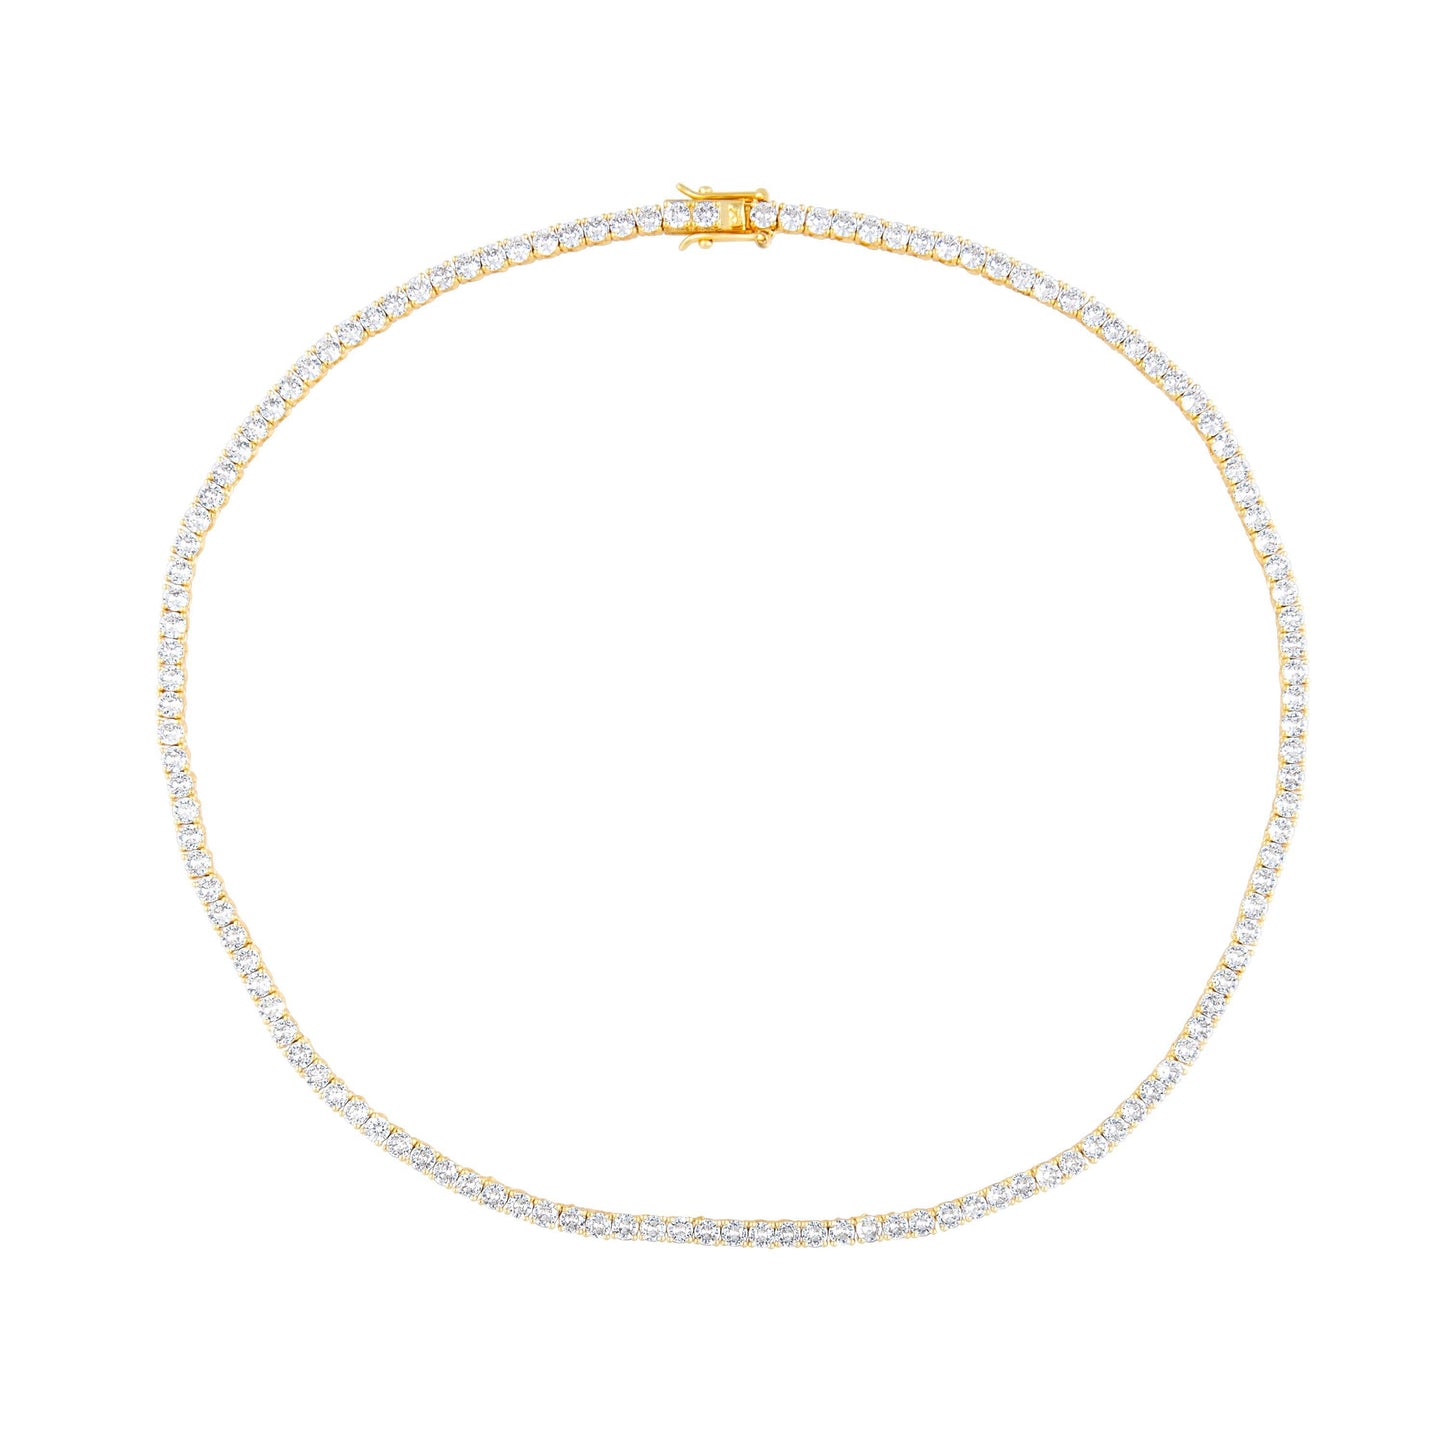 Sahira Jewelry Design - Karla Tennis Necklace: Silver / 16"